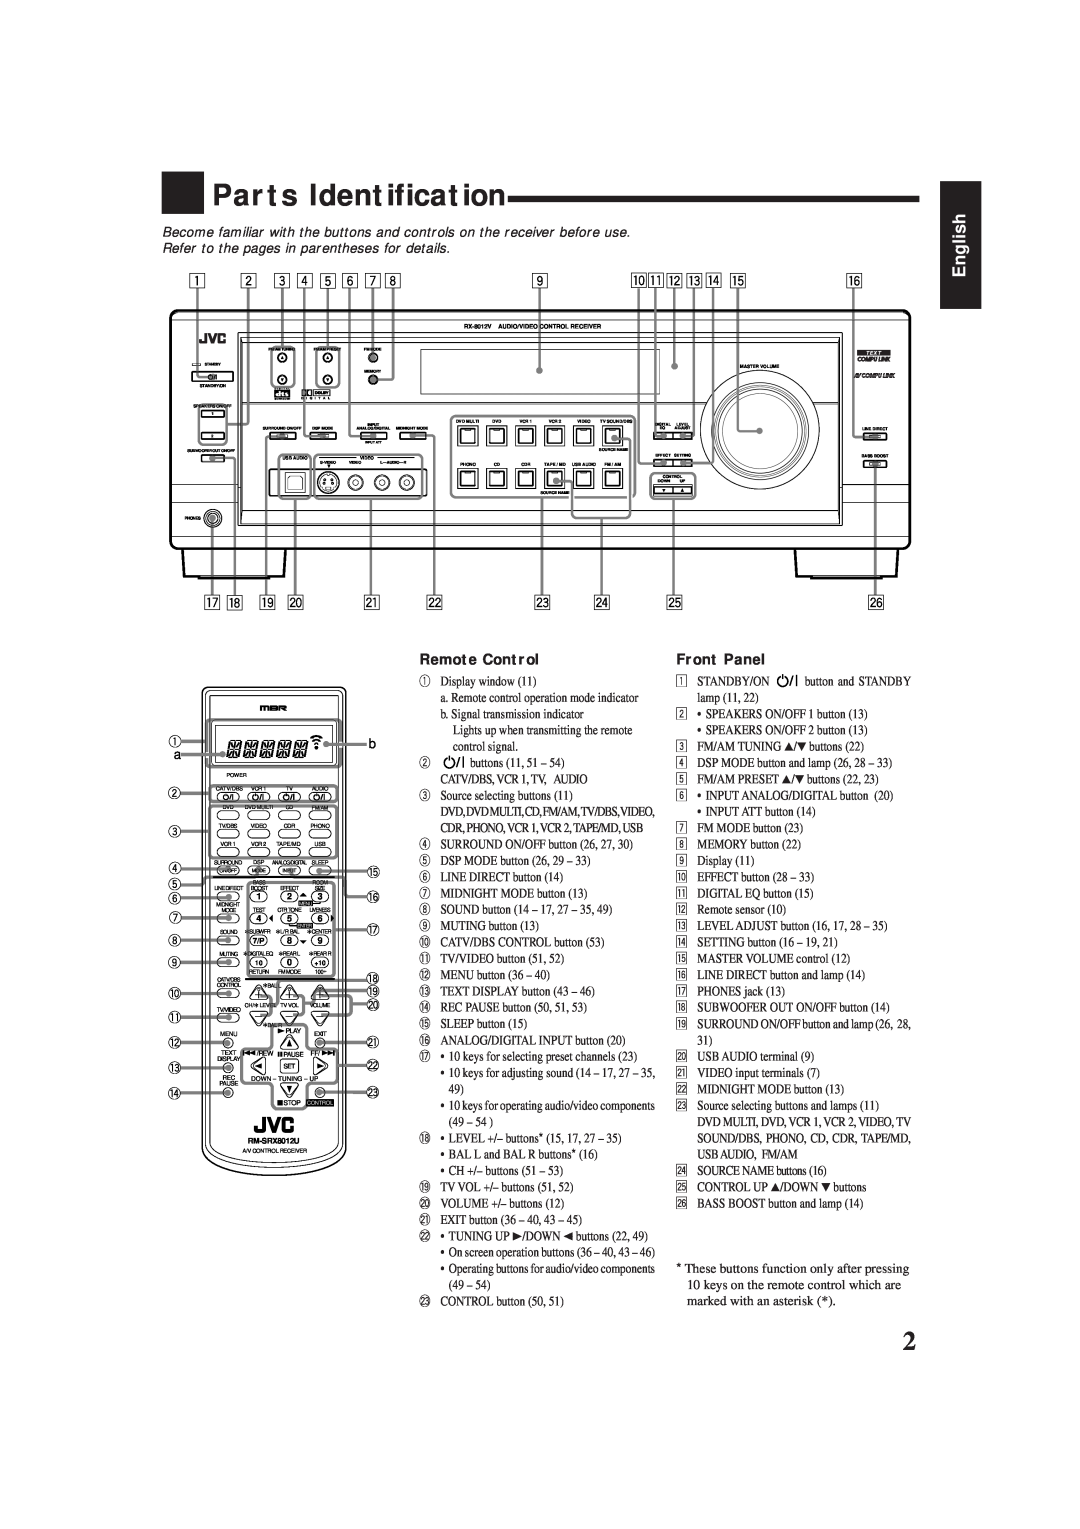 JVC RX-8012VSL manual Parts Identification, English, u i o, Remote Control, Front Panel 